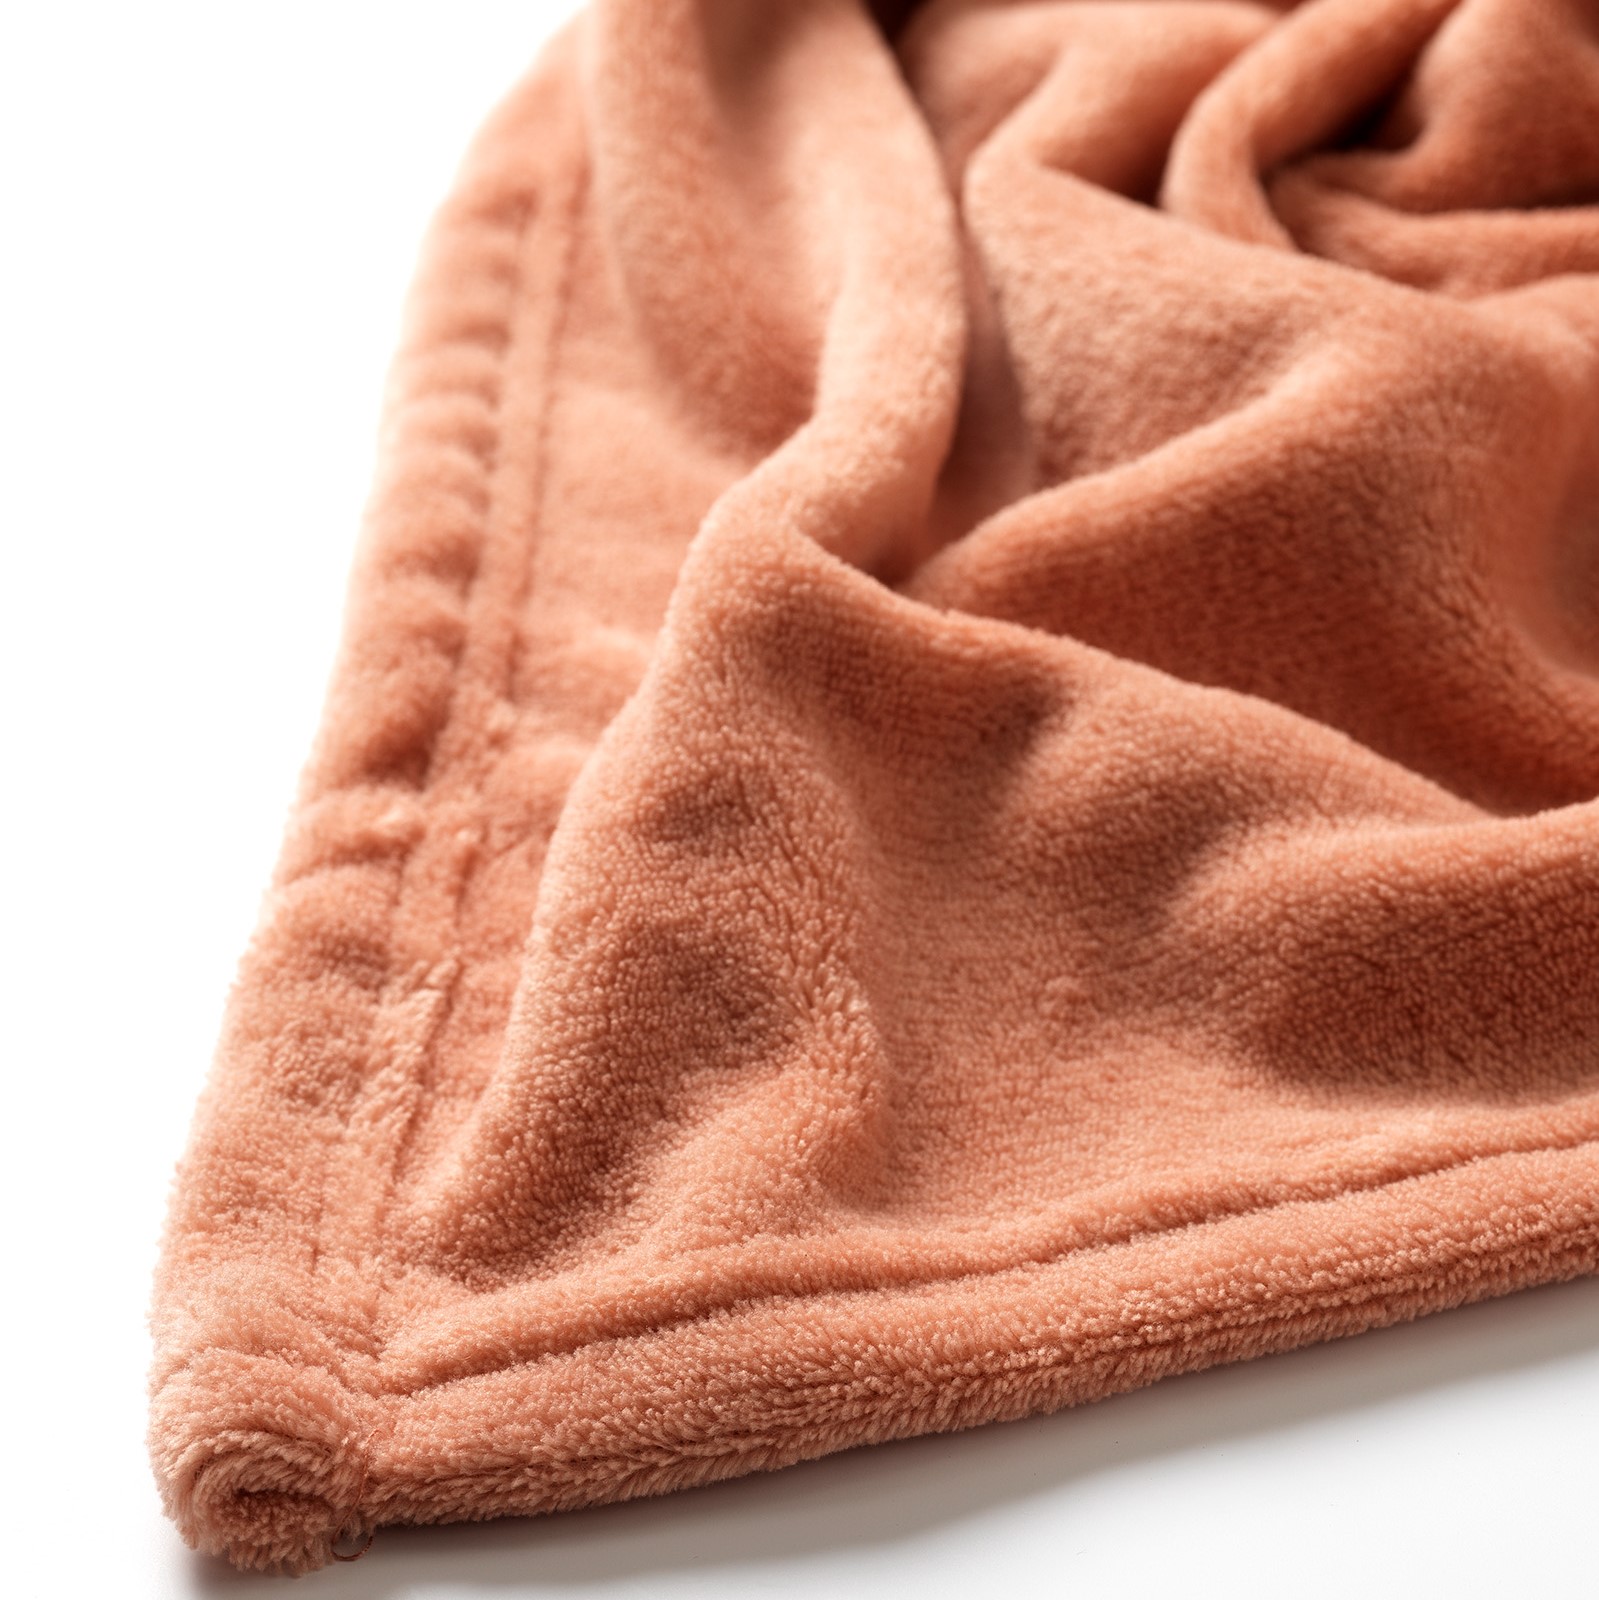 HARVEY - Plaid van fleece Muted Clay 150x200 cm - roze - superzacht